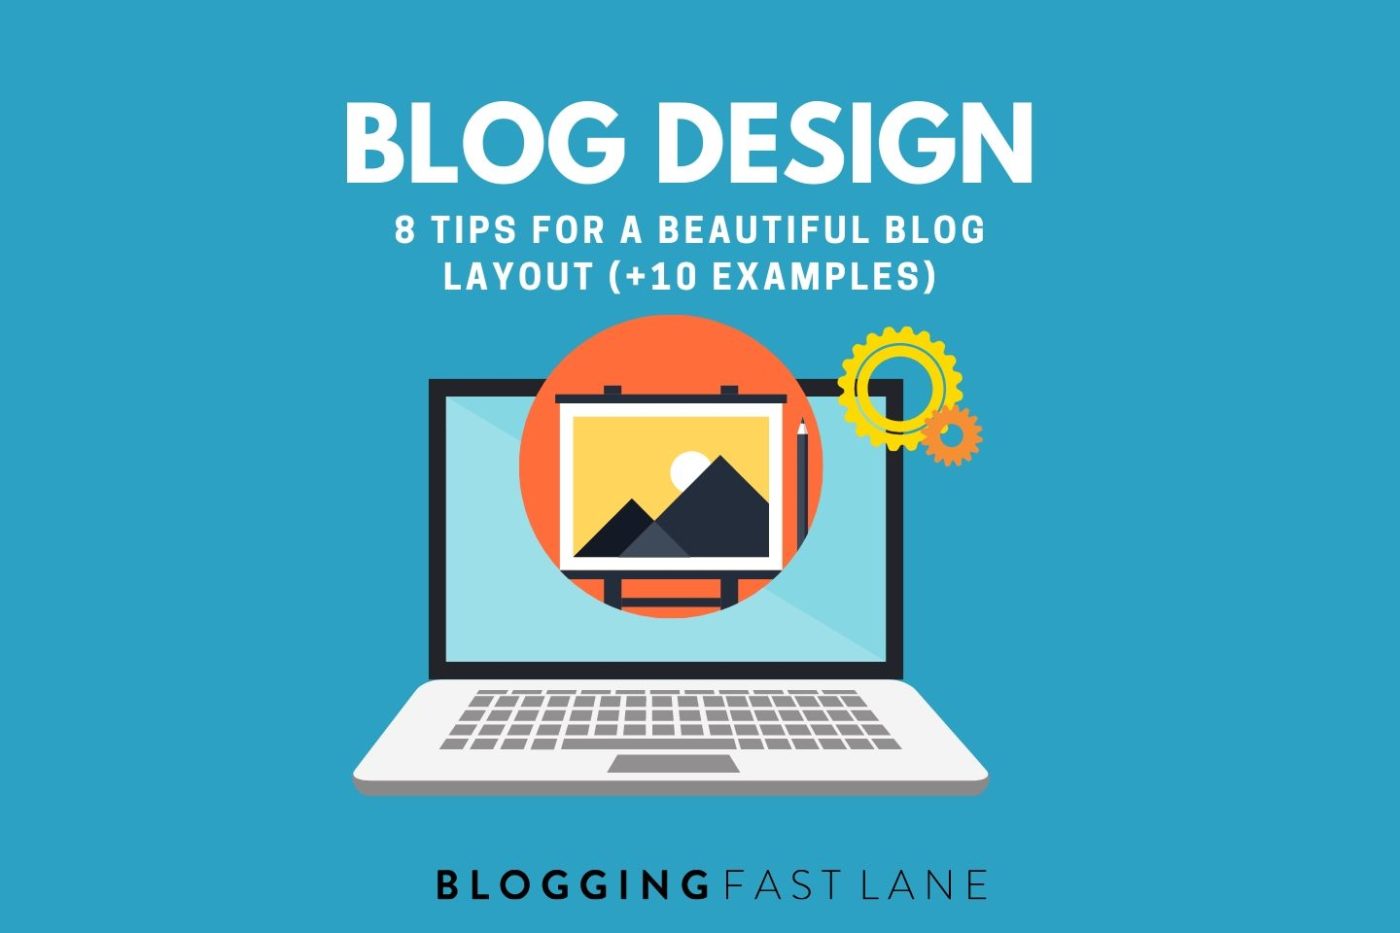 Blog design tips